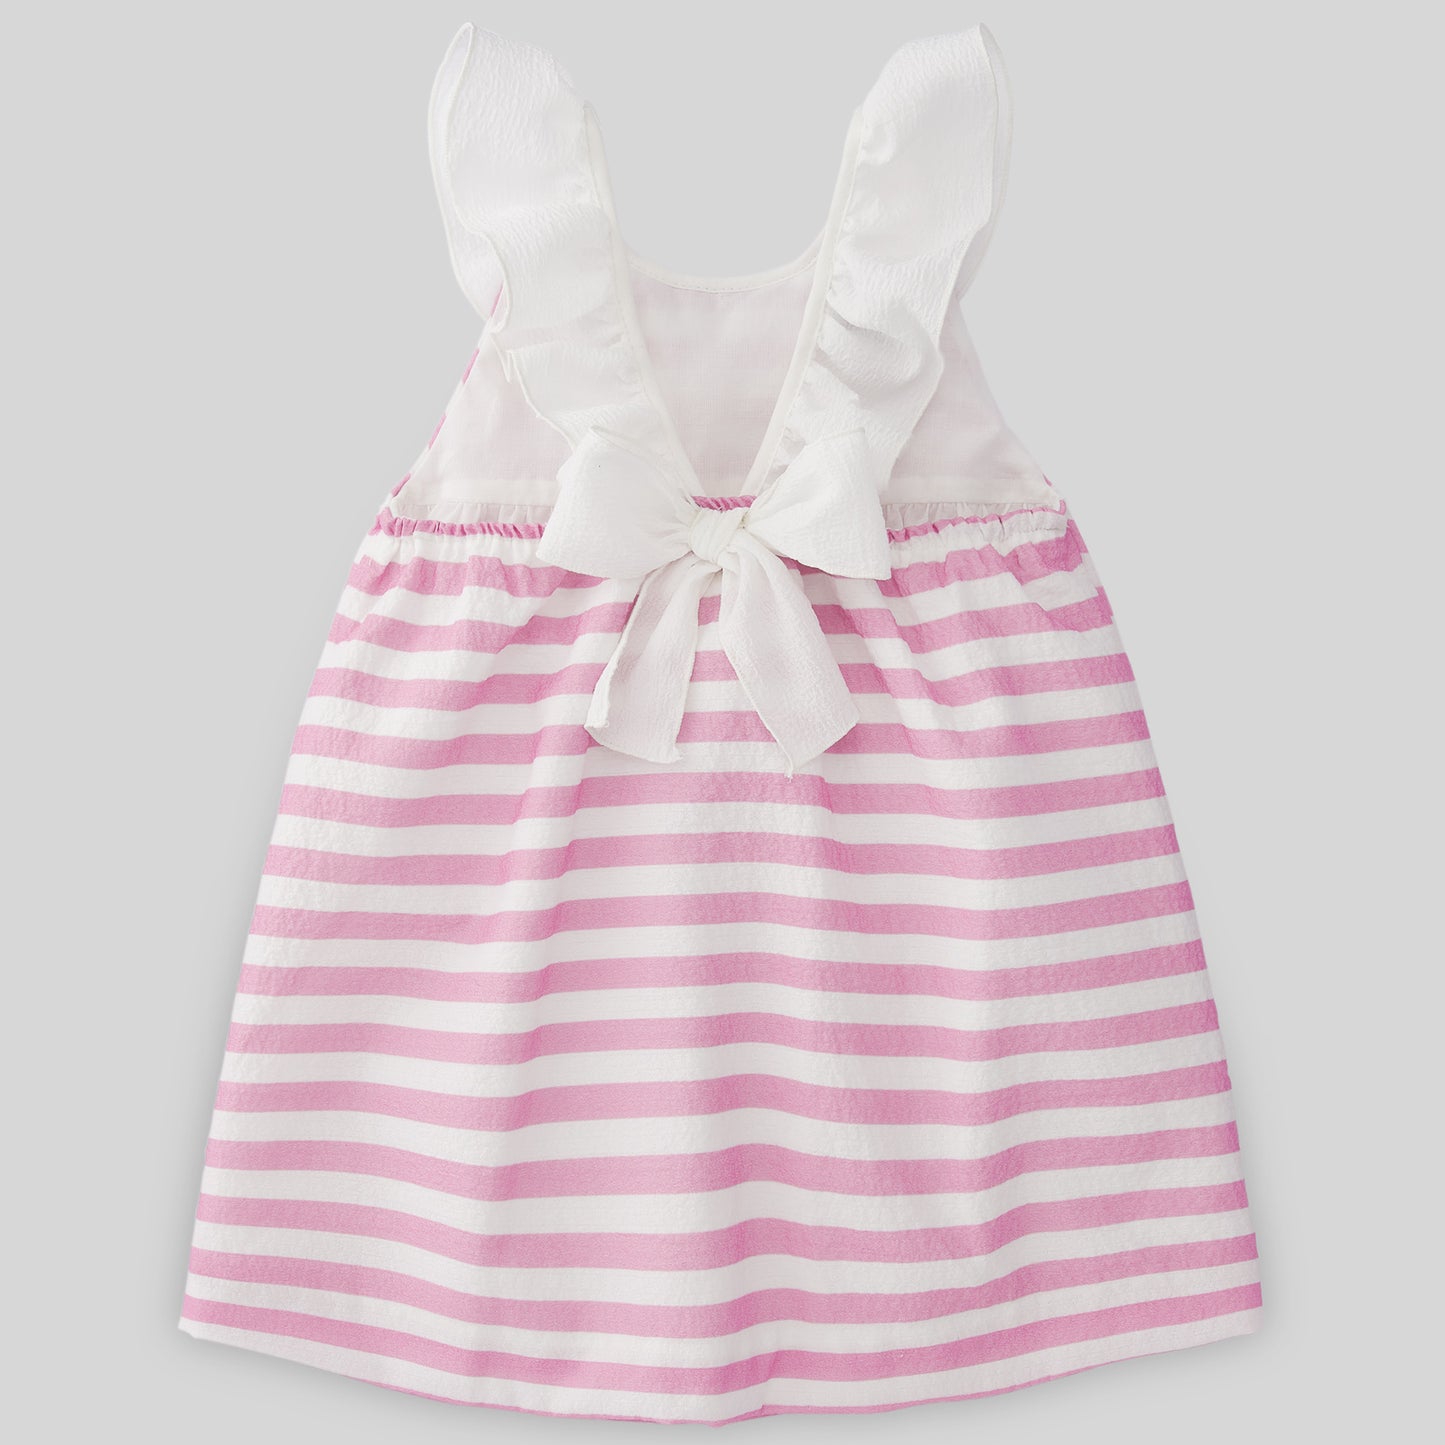 PAZ RODRIGUEZ White-pink striped dress